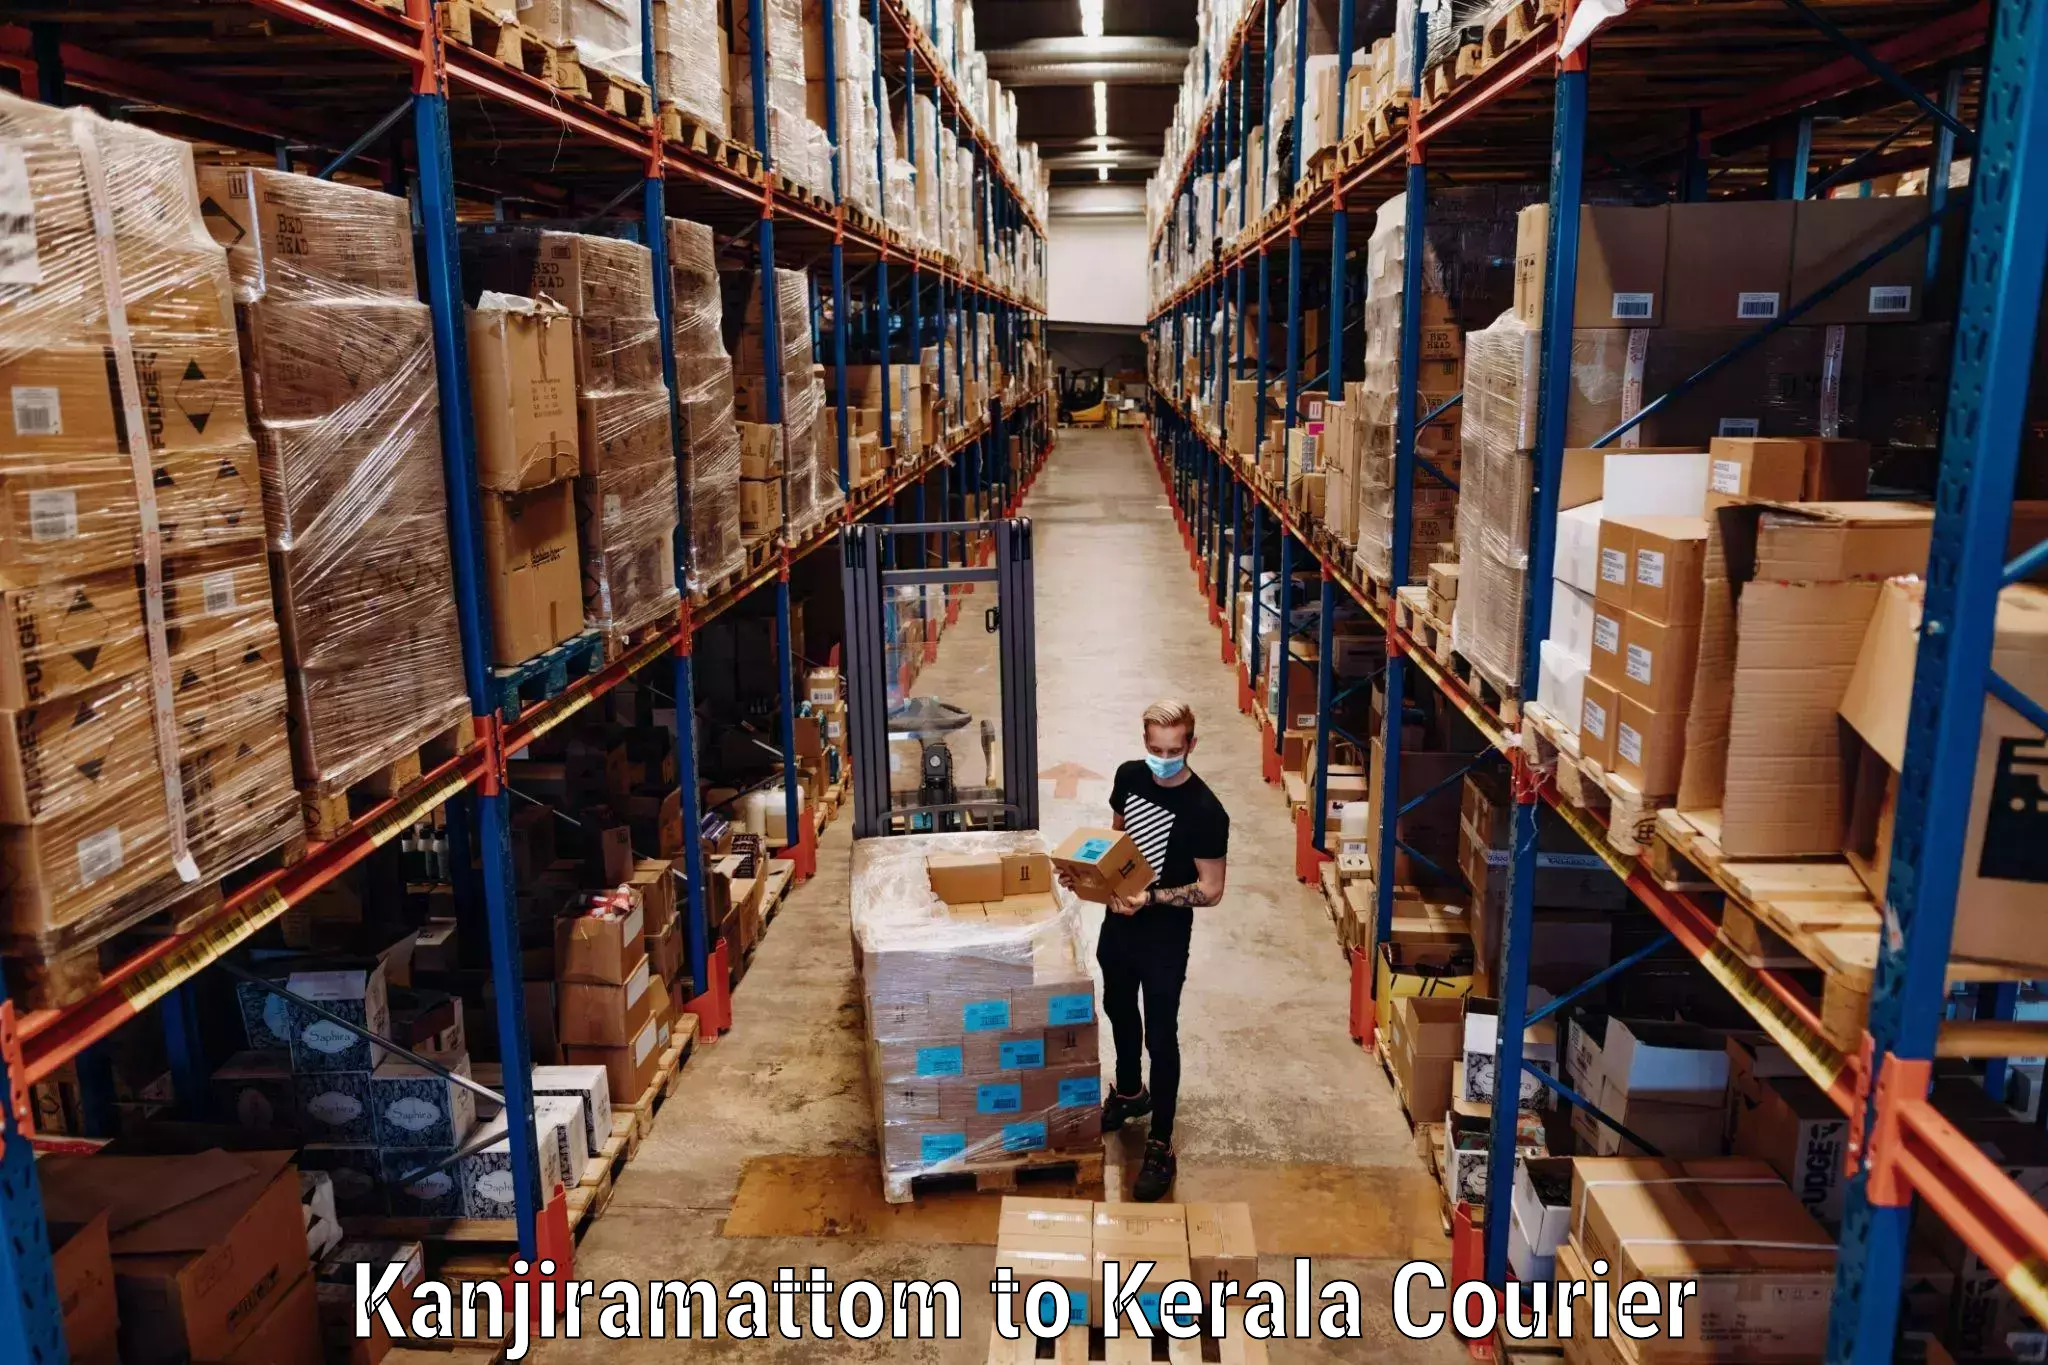 Baggage relocation service in Kanjiramattom to Kochi